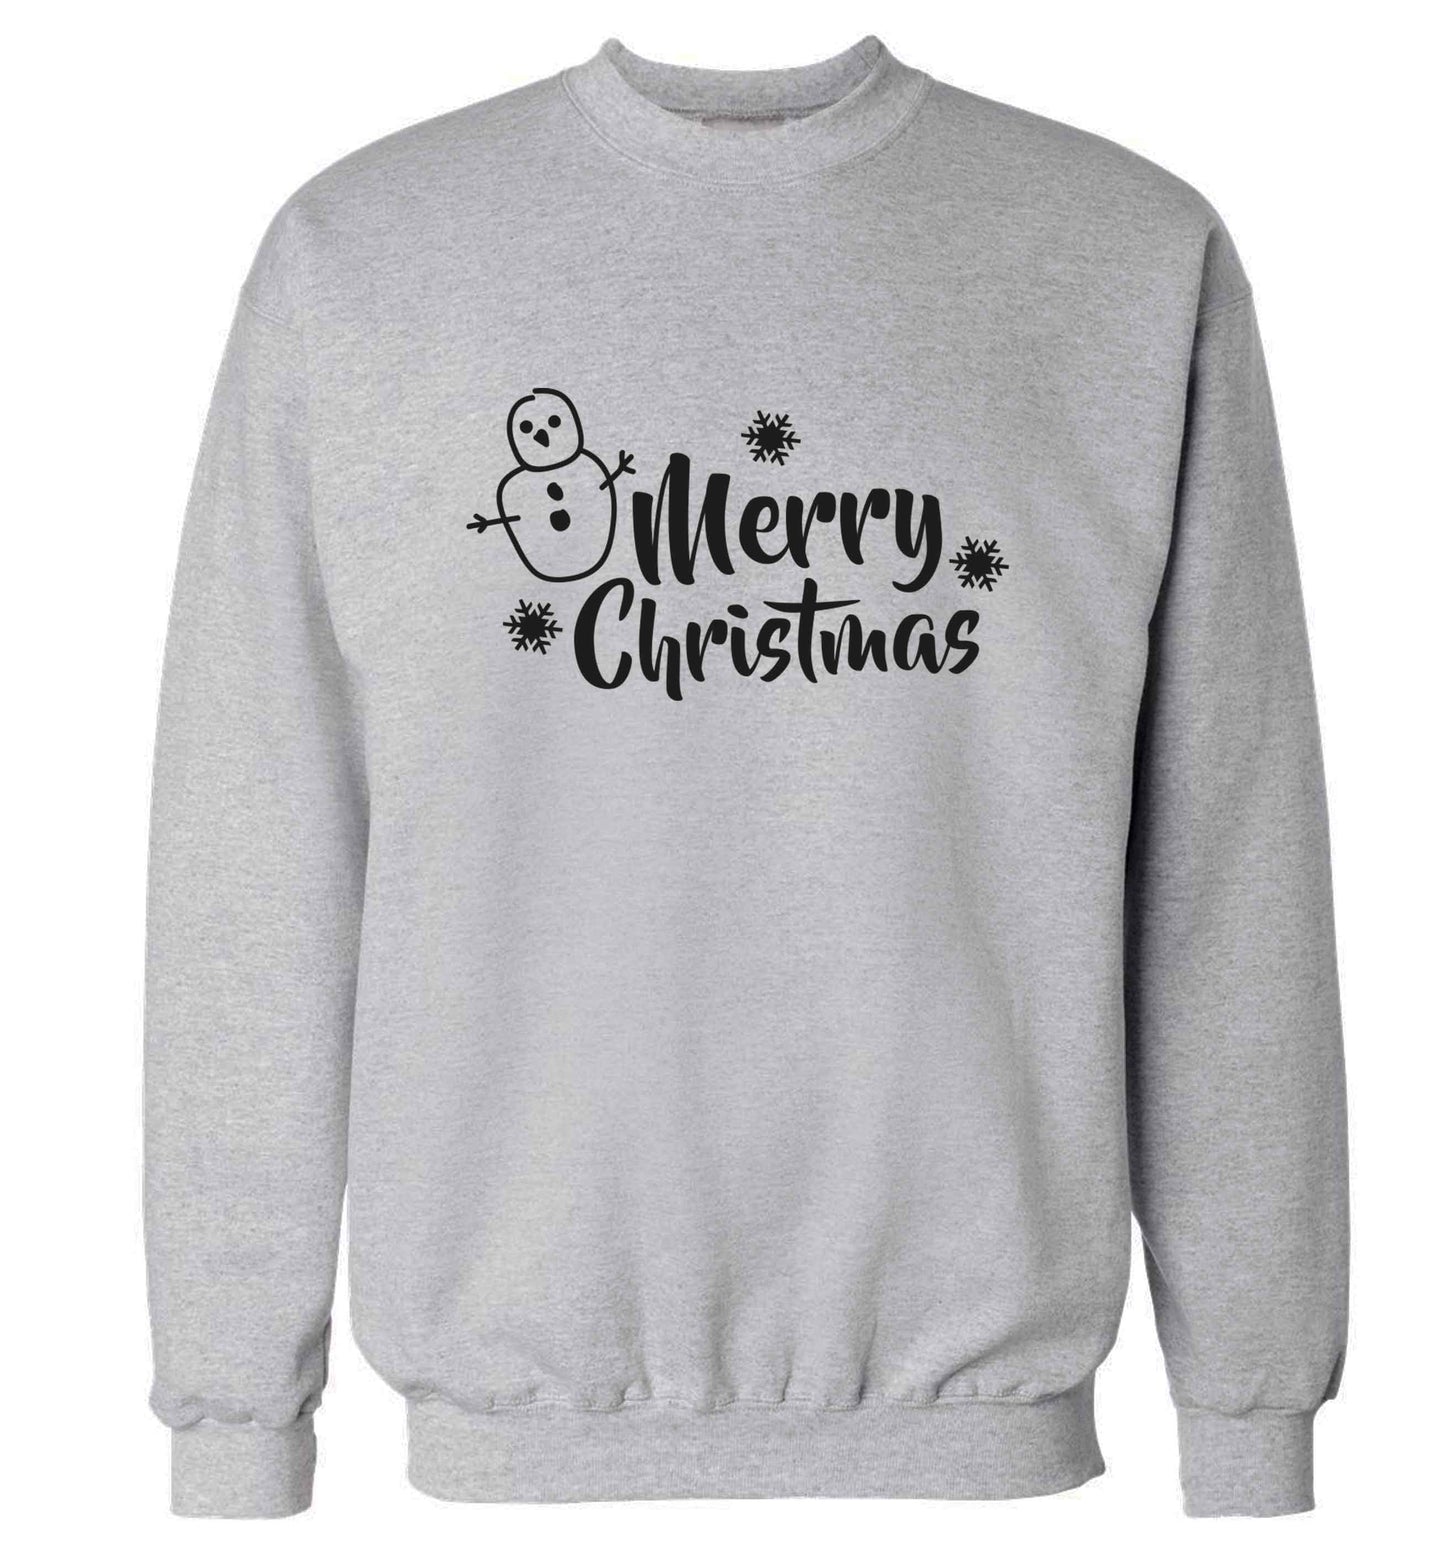 Merry Christmas - snowman adult's unisex grey sweater 2XL